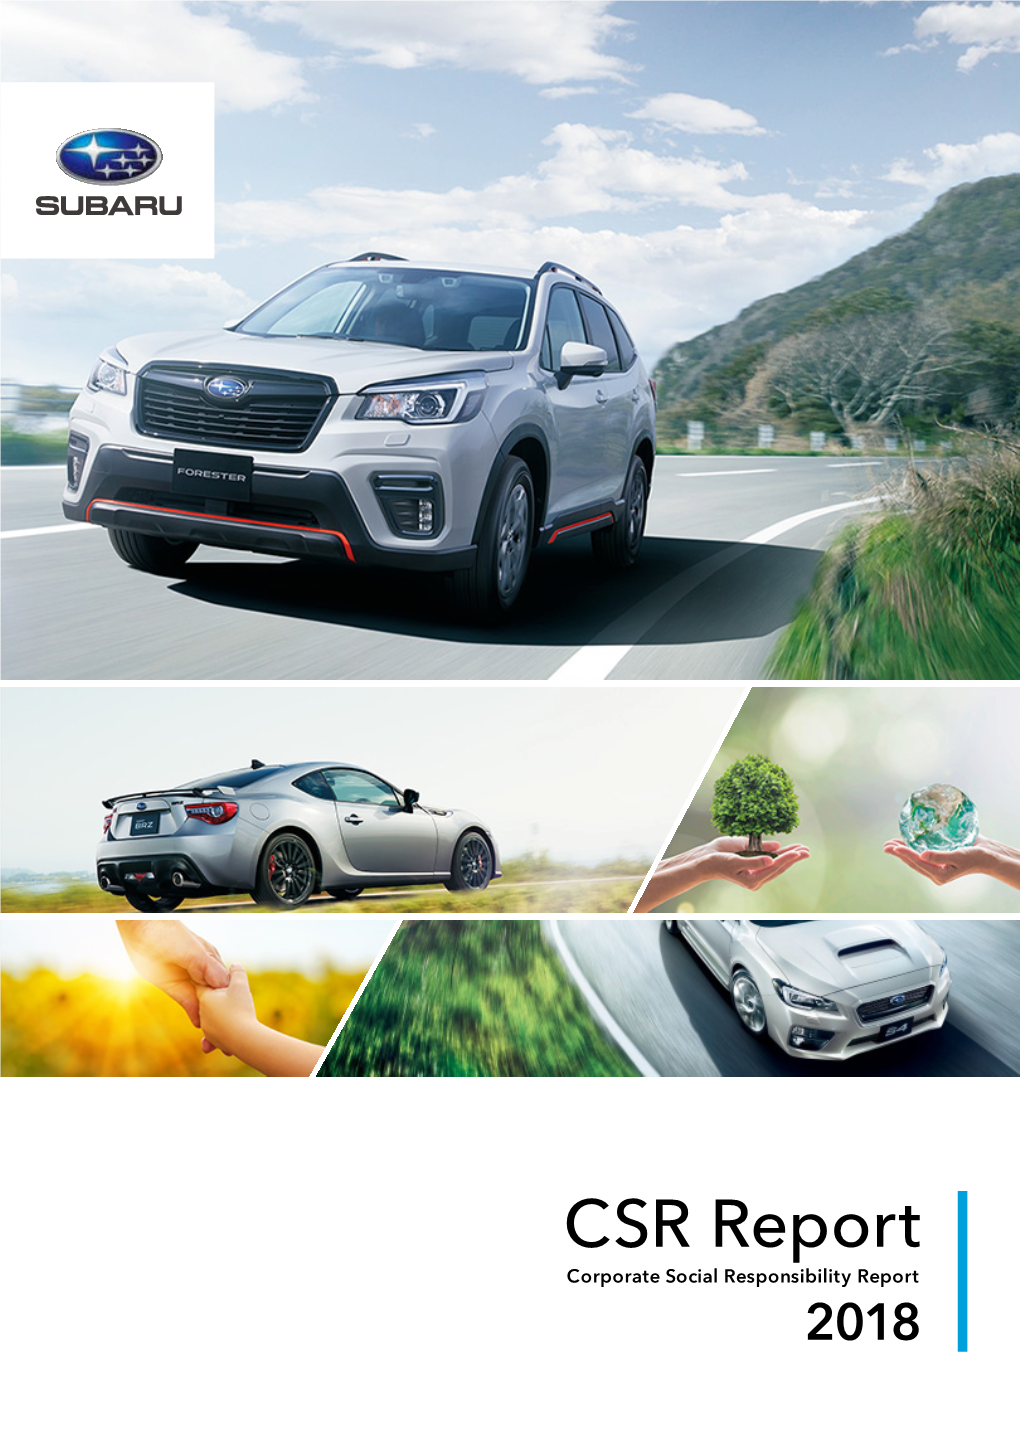 CSR Report Corporate Social Responsibility Report 2018 2018 Corporate Social Responsibility Report Contents